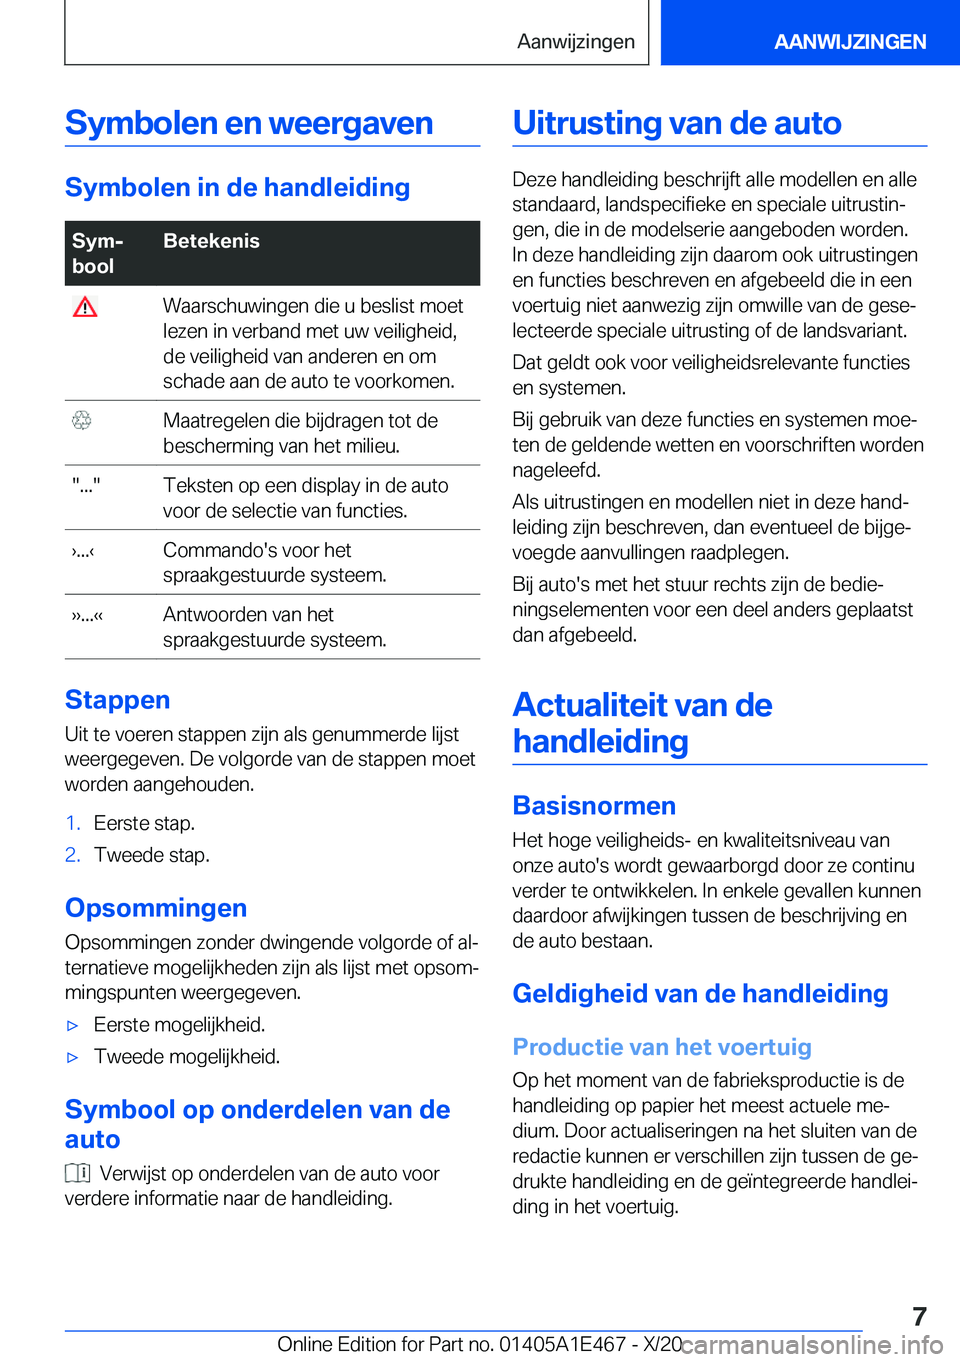 BMW M3 2021  Instructieboekjes (in Dutch) �S�y�m�b�o�l�e�n��e�n��w�e�e�r�g�a�v�e�n
�S�y�m�b�o�l�e�n��i�n��d�e��h�a�n�d�l�e�i�d�i�n�g
�S�y�mj
�b�o�o�l�B�e�t�e�k�e�n�i�s��W�a�a�r�s�c�h�u�w�i�n�g�e�n��d�i�e��u��b�e�s�l�i�s�t��m�o�e�t
